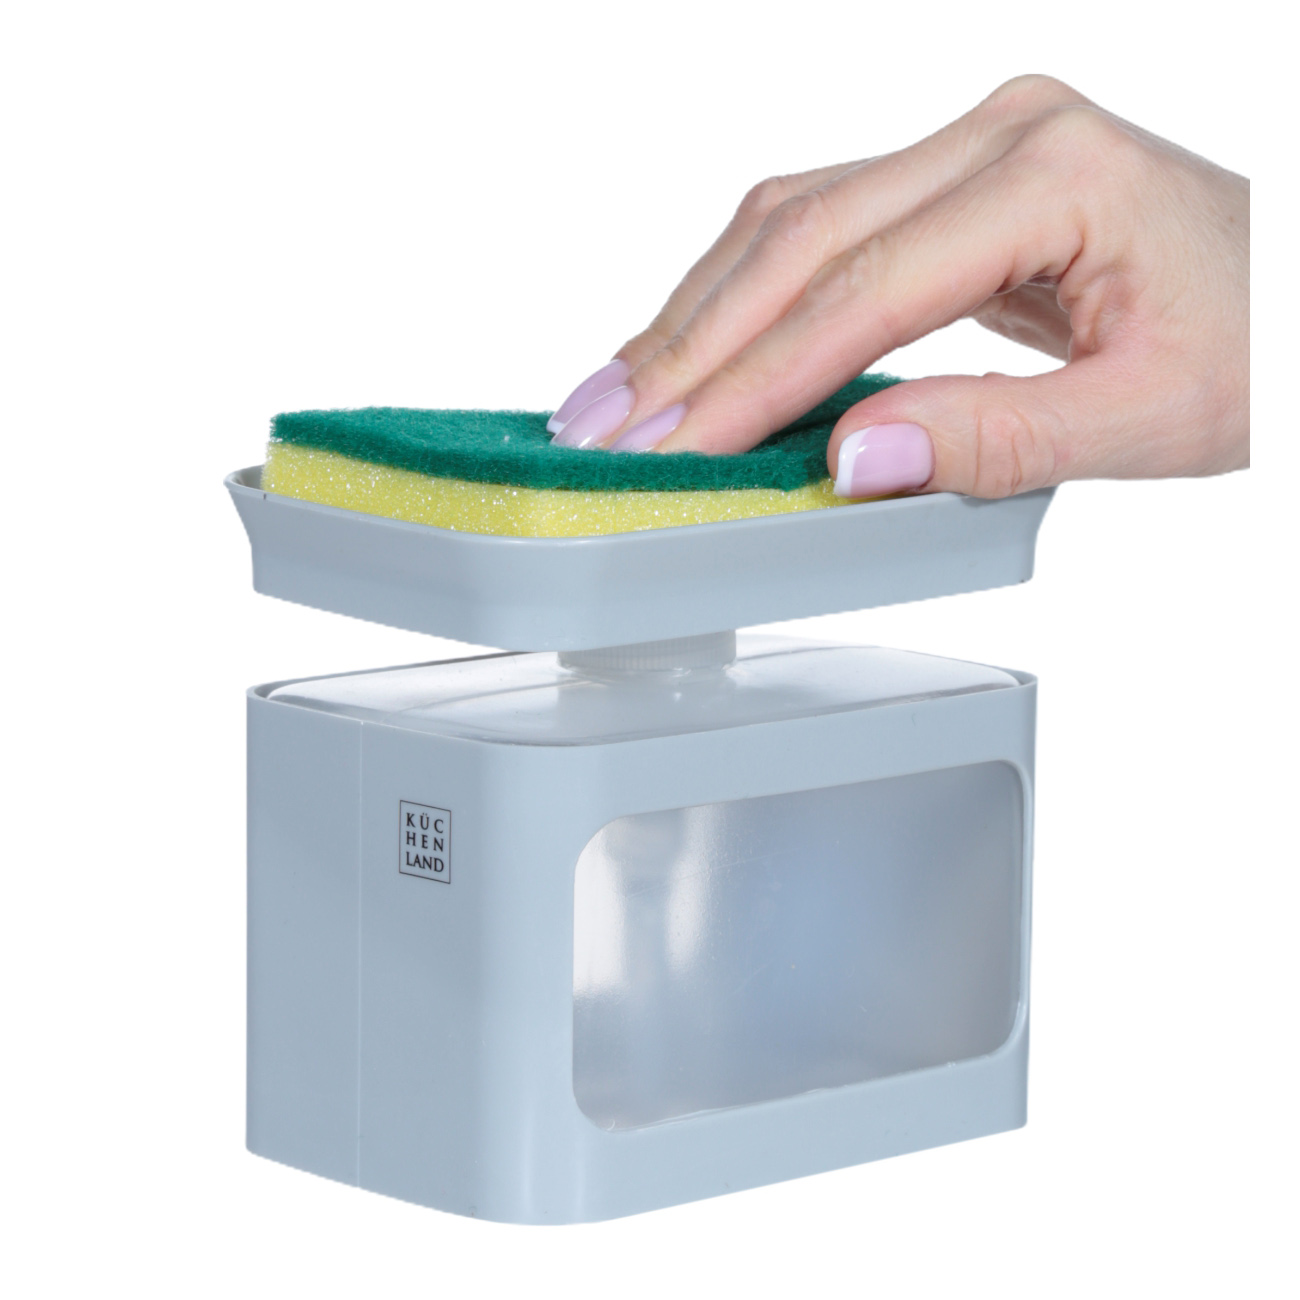 Detergent dispenser, 680 ml, with sponge, Platform, Plastic, Grey, Keeping изображение № 4